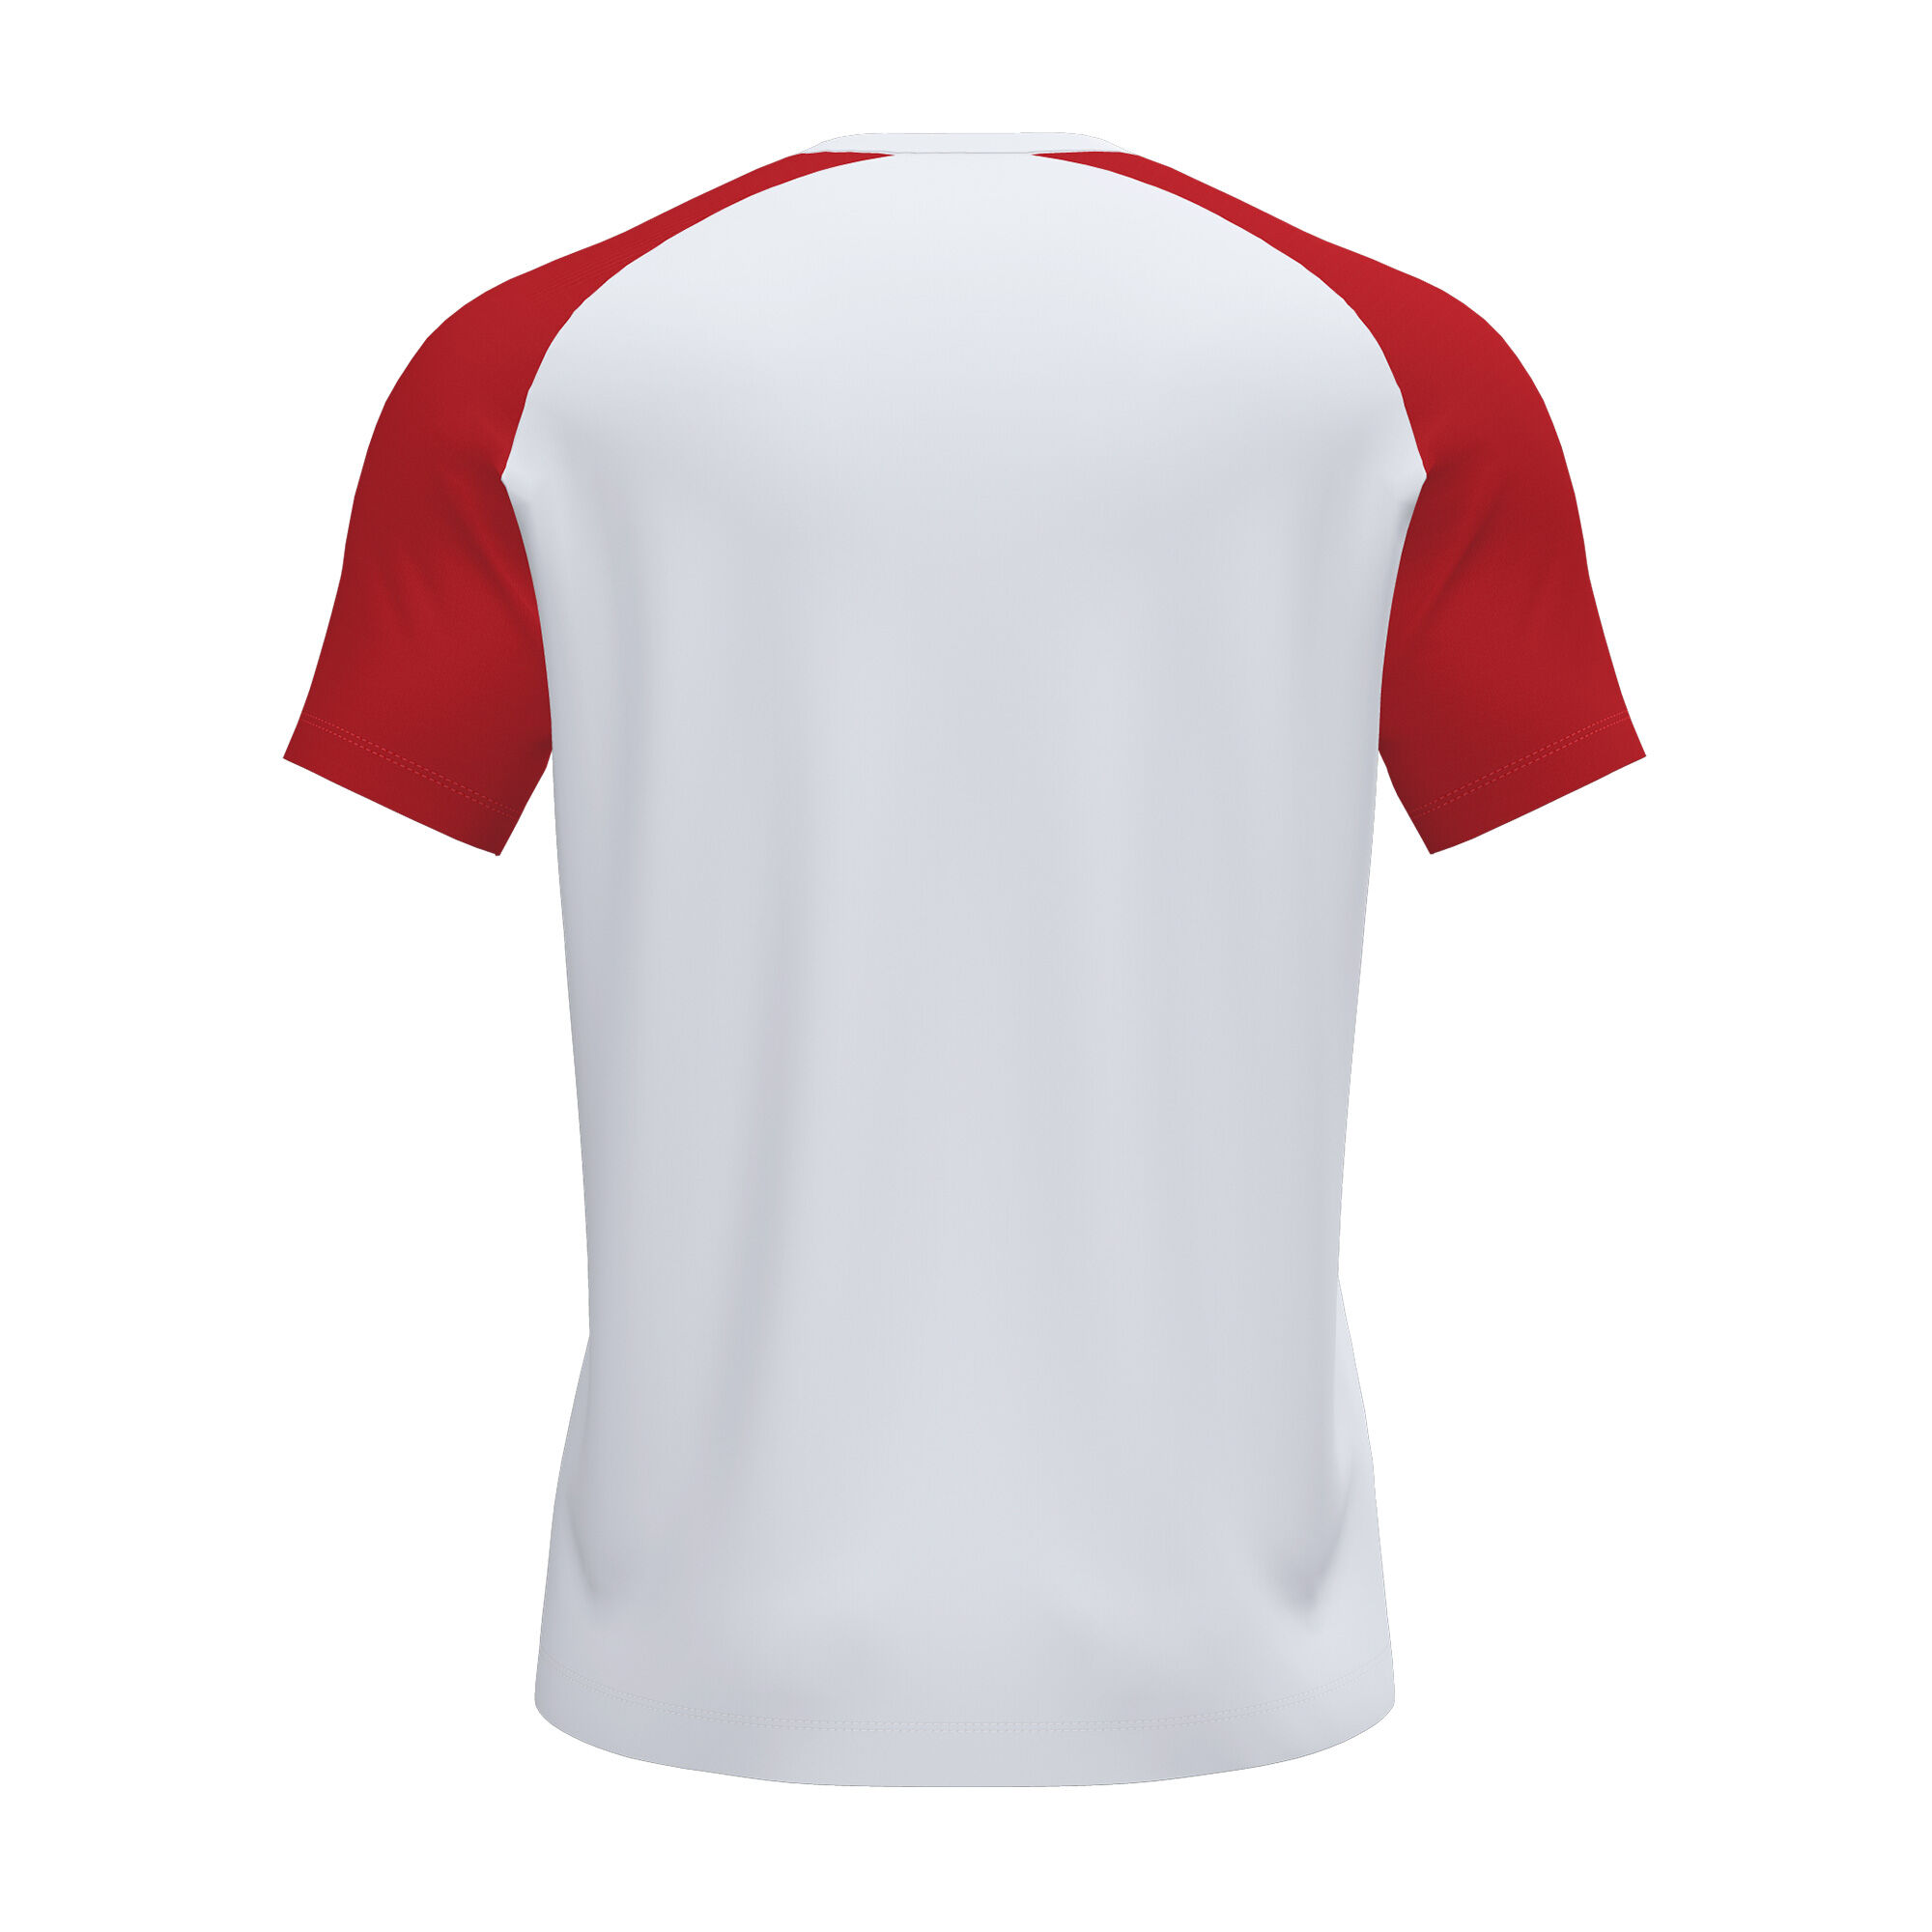 Camiseta manga corta hombre Academy IV blanco rojo